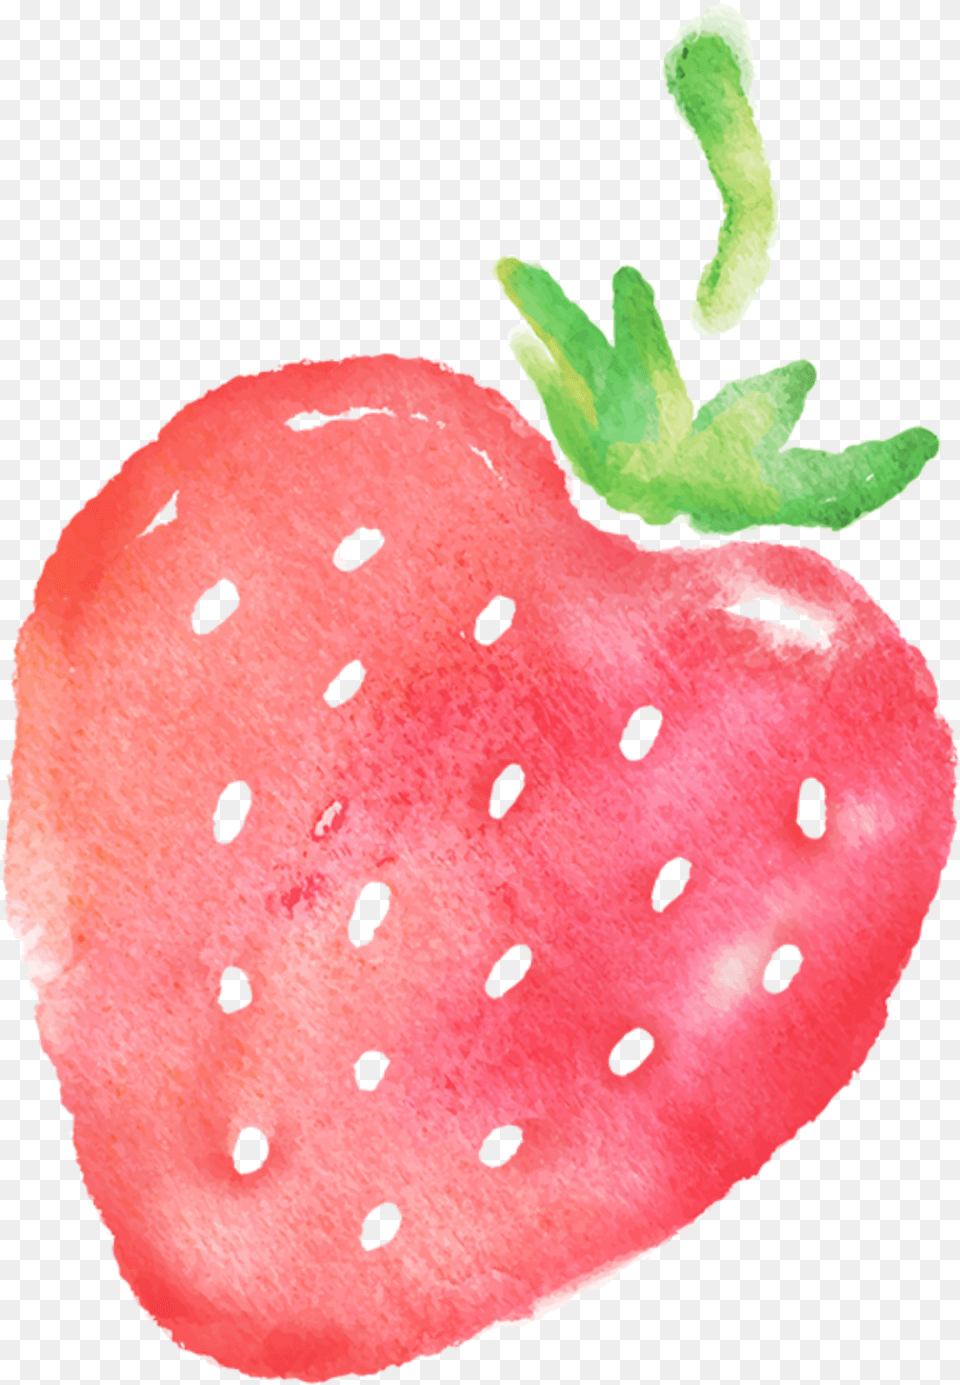 Morango Aquarela Strawberry Watercolor Strawberry Vector, Berry, Produce, Plant, Fruit Png